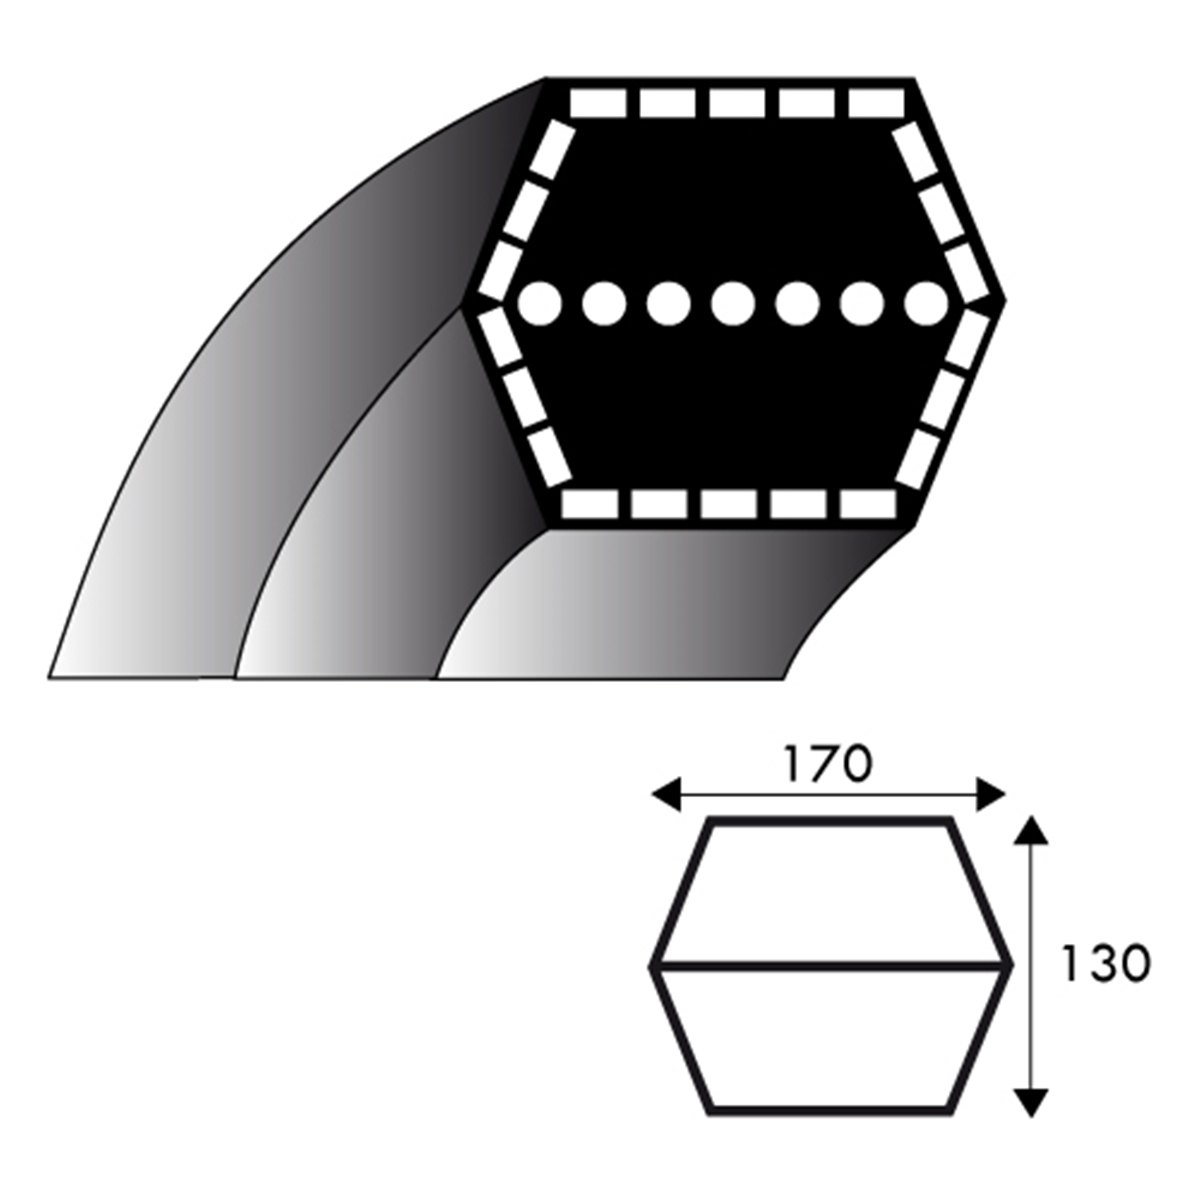 AA112 Hexagonal Tondeuse Courroie Dentraînement 